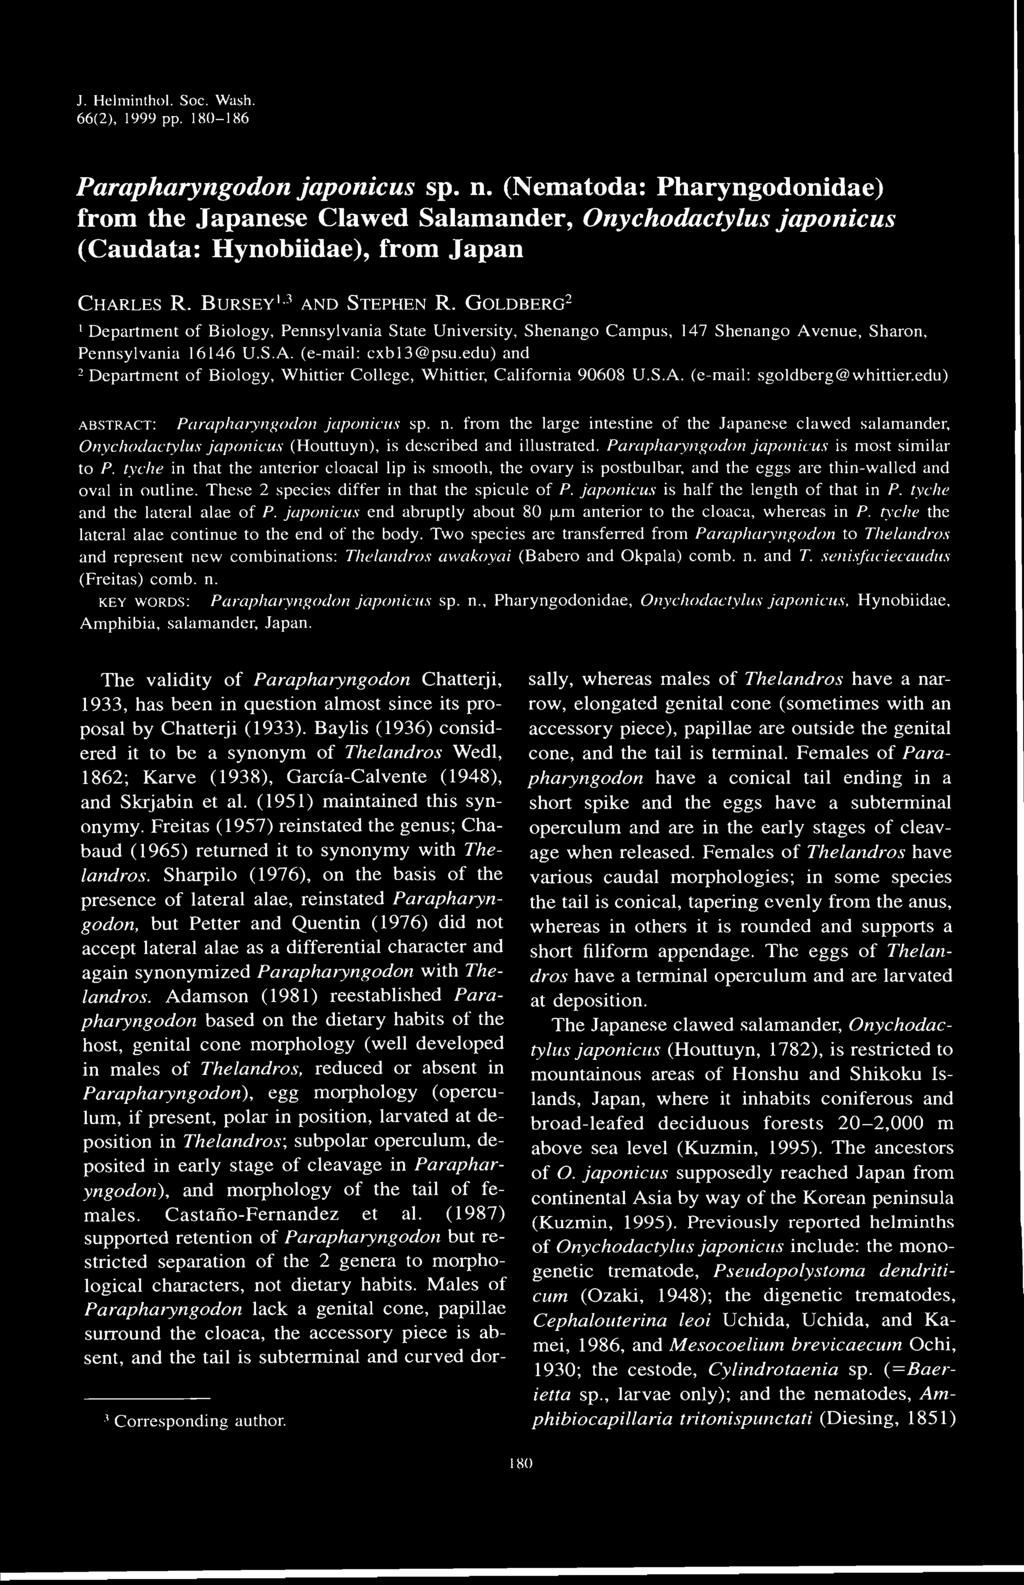 J. Helminthol. Soc. Wash. 66(2), 1999 pp. 180-186 Parapharyngodon japonicus sp. n.